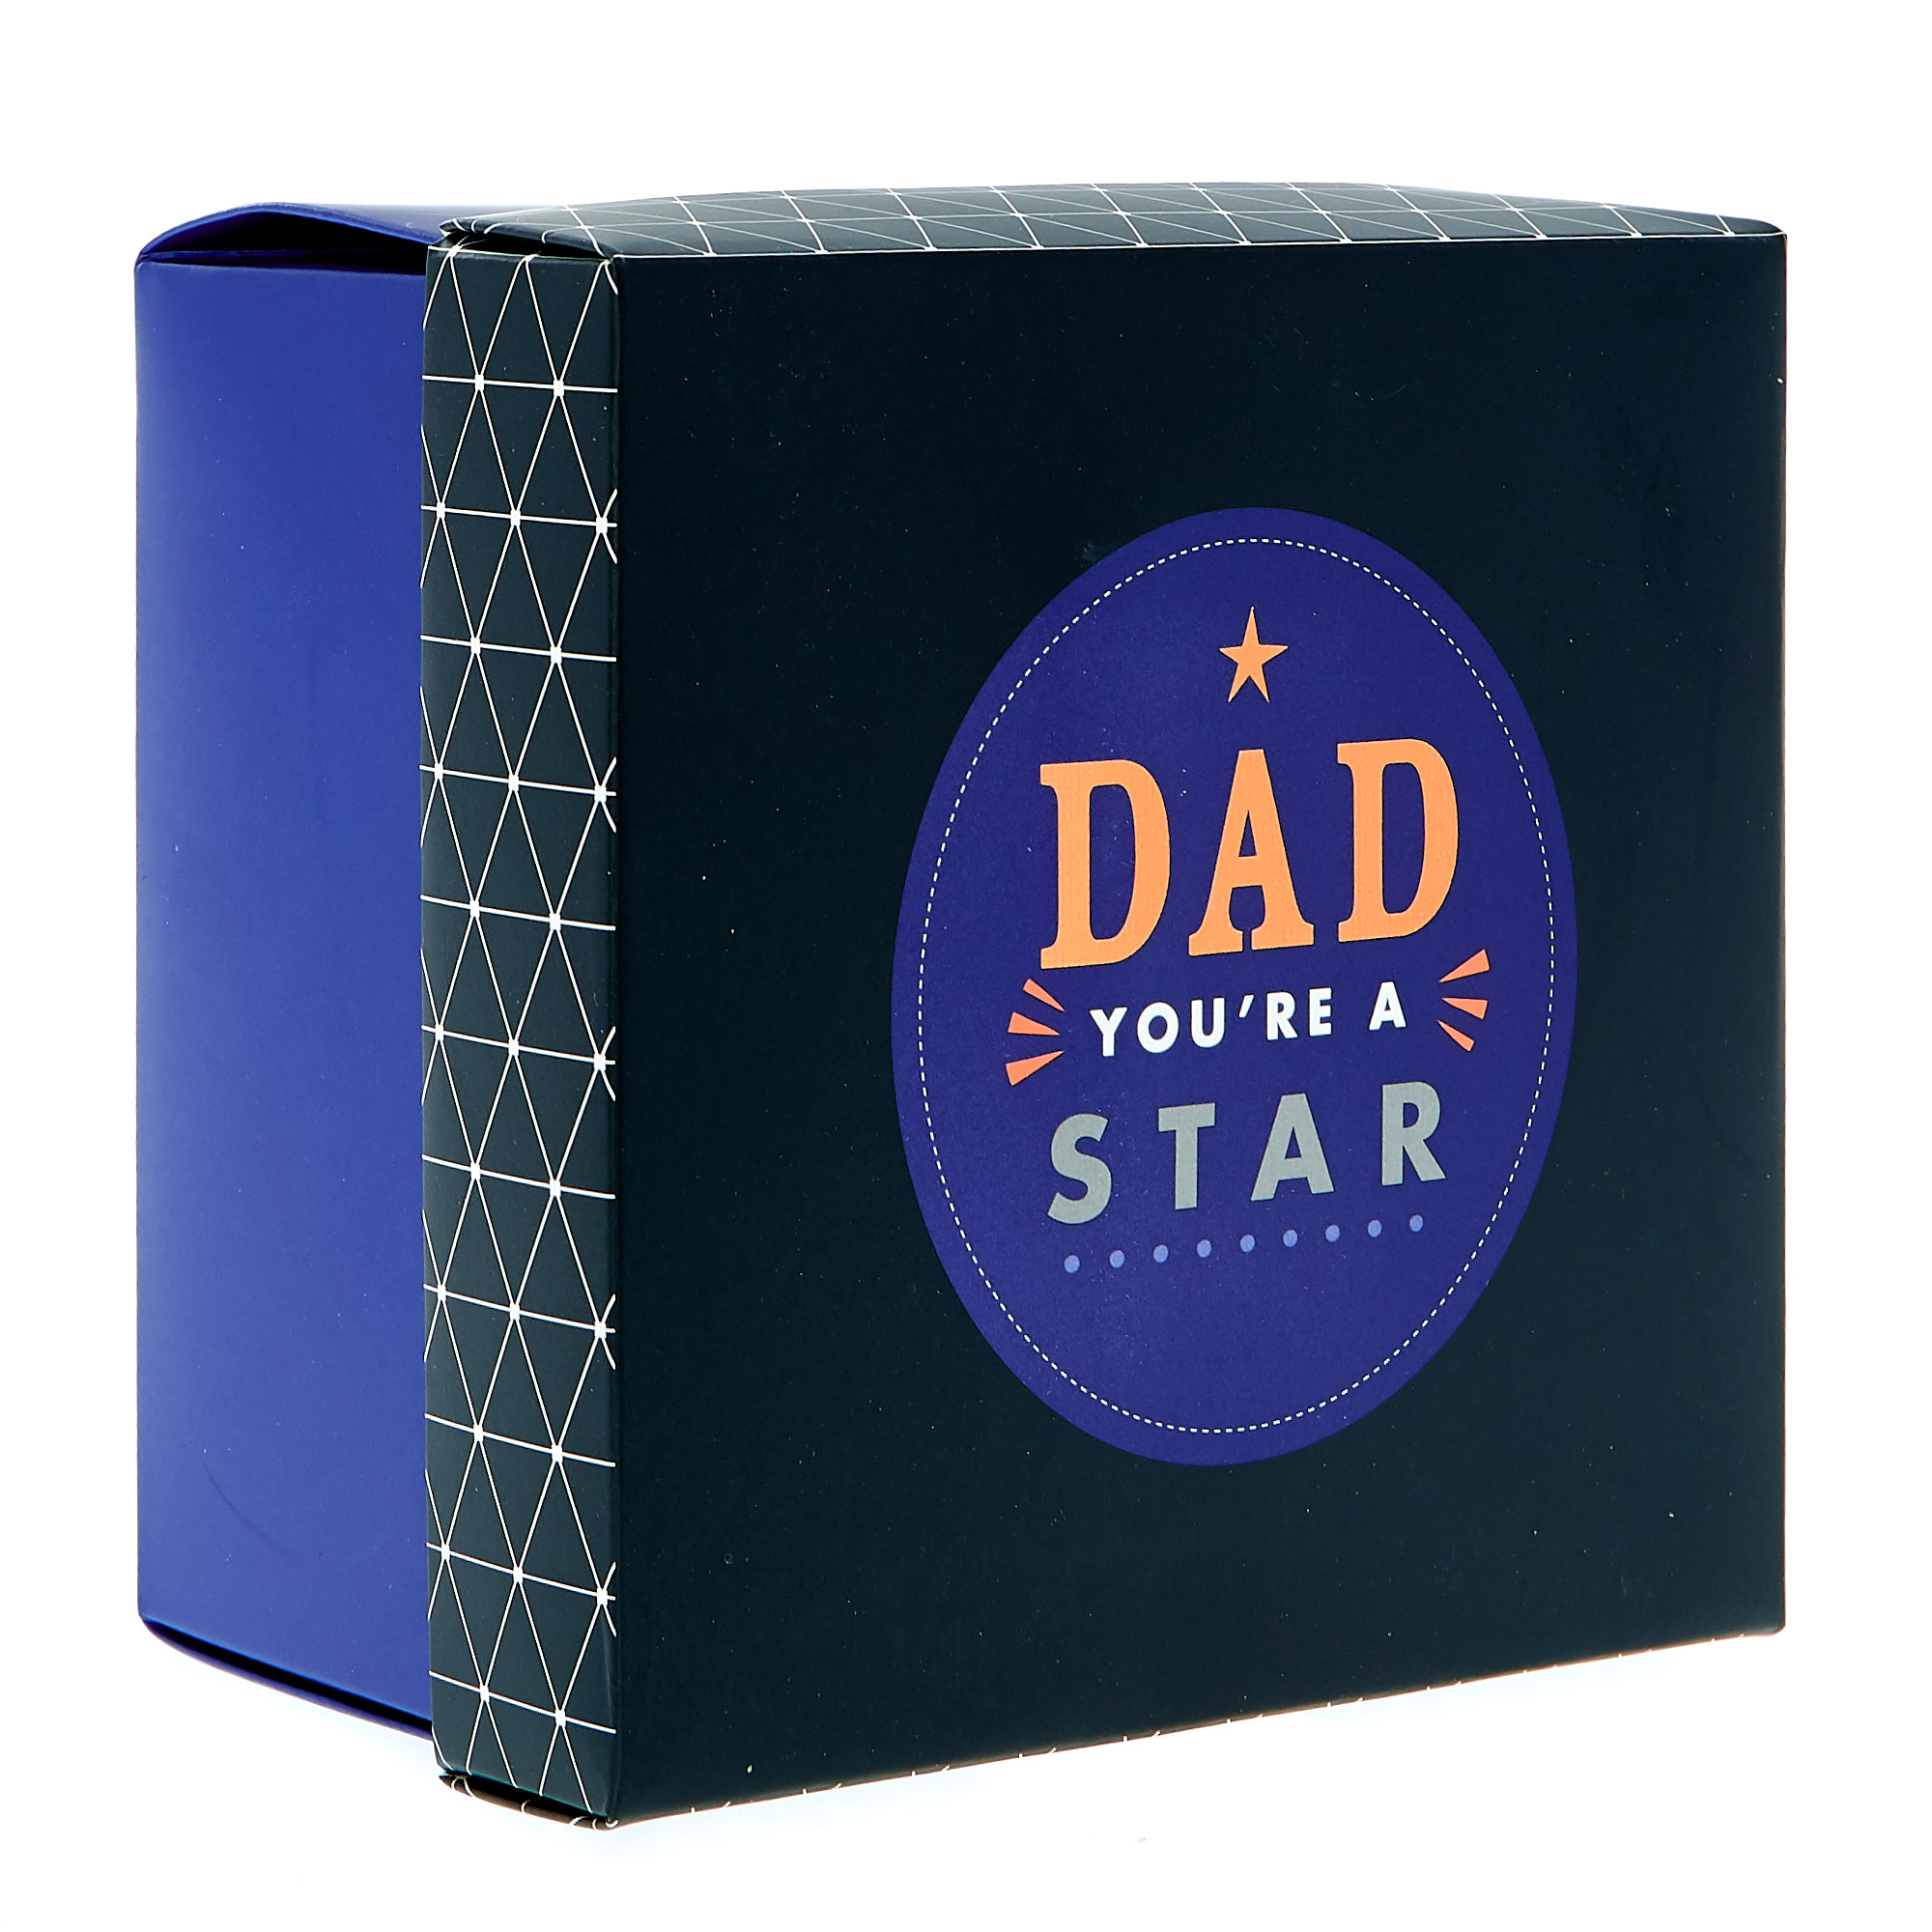 Dad You're A Star Mug In A Box